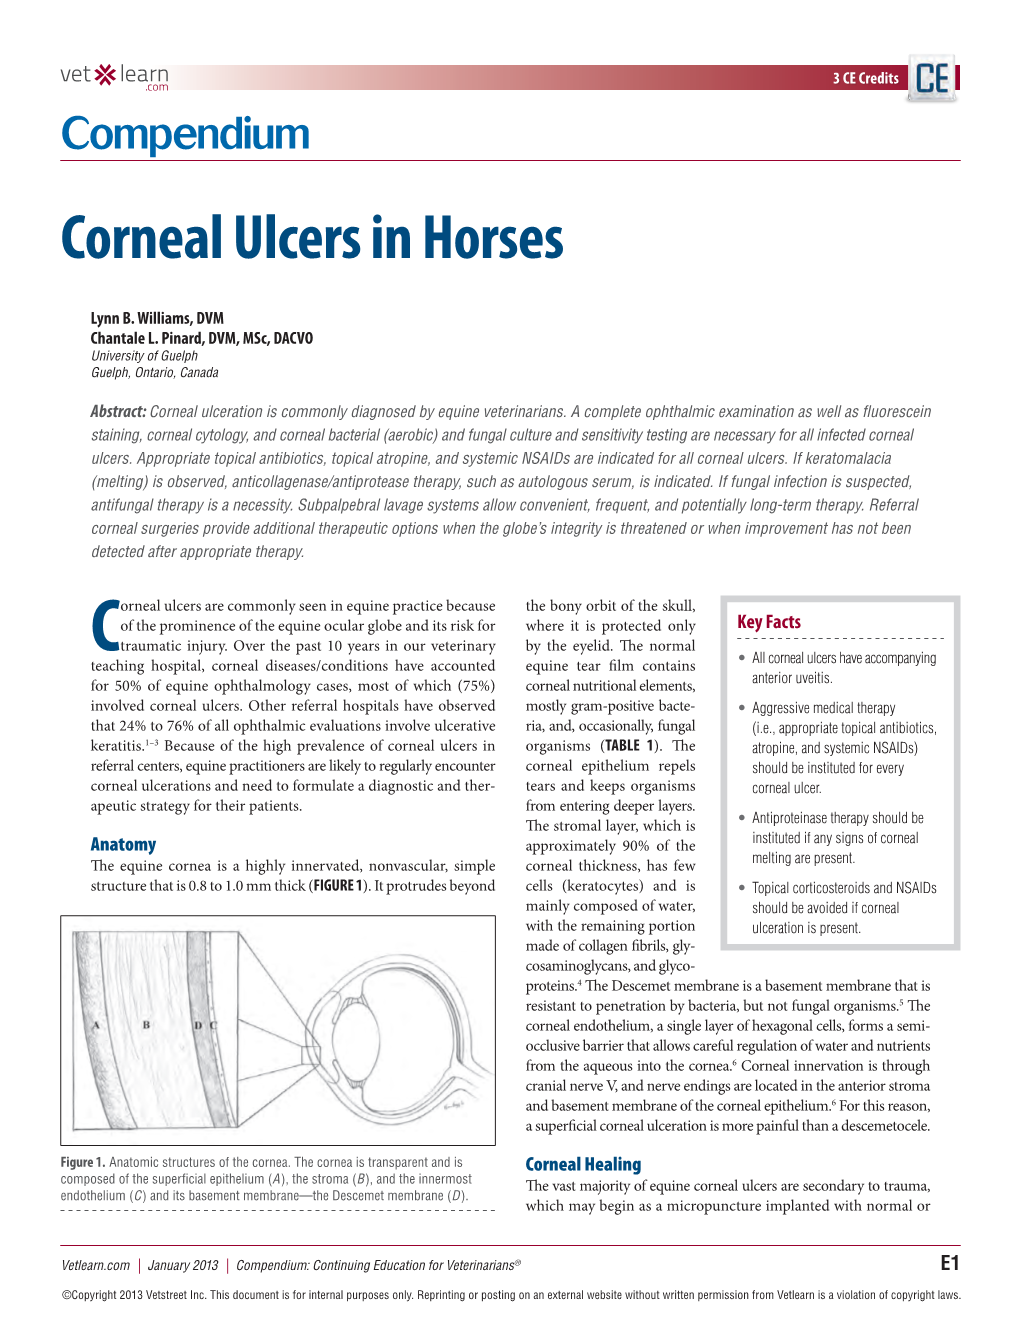 Corneal Ulcers in Horses